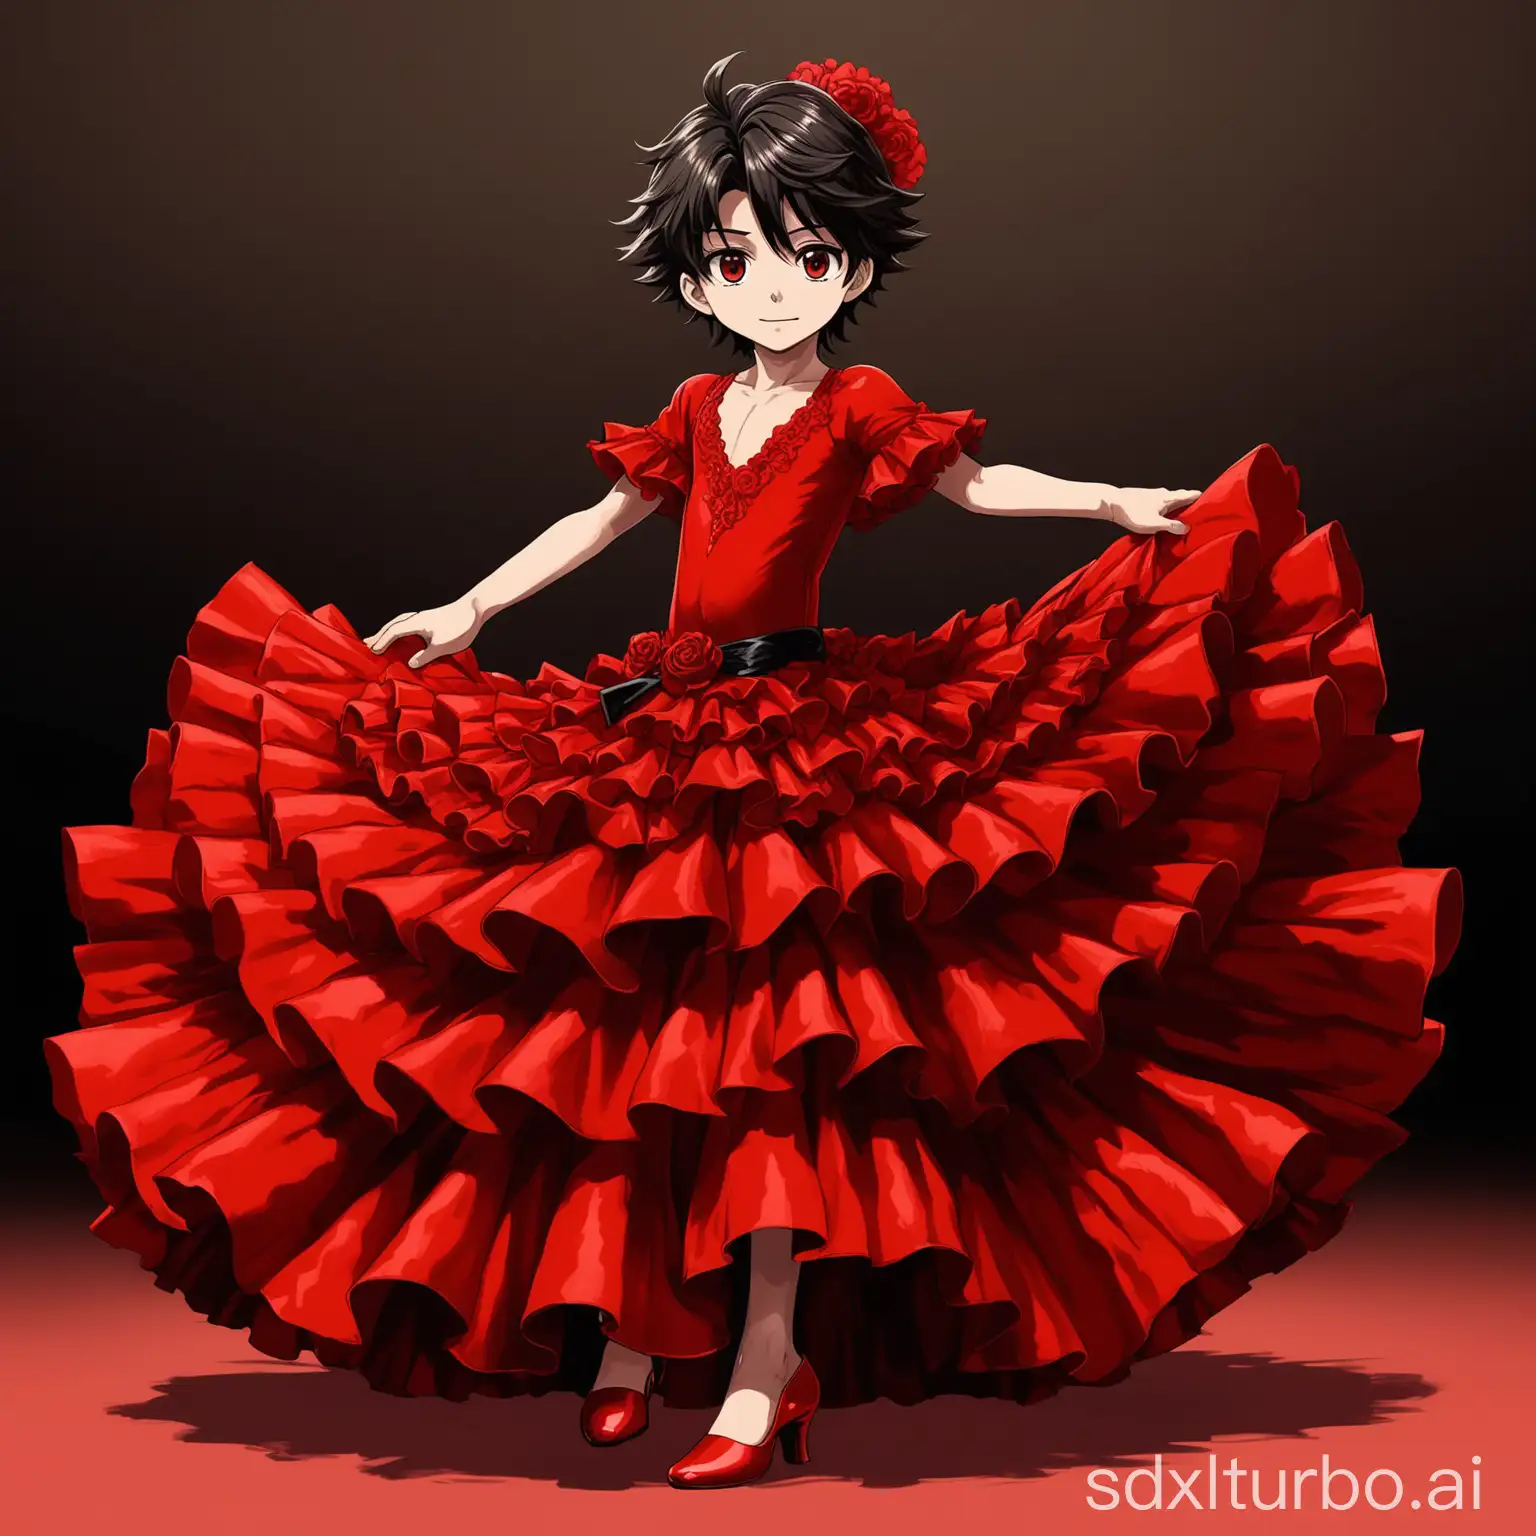 Elegant-Anime-Boy-in-Red-Flamenco-Dress-and-Heels